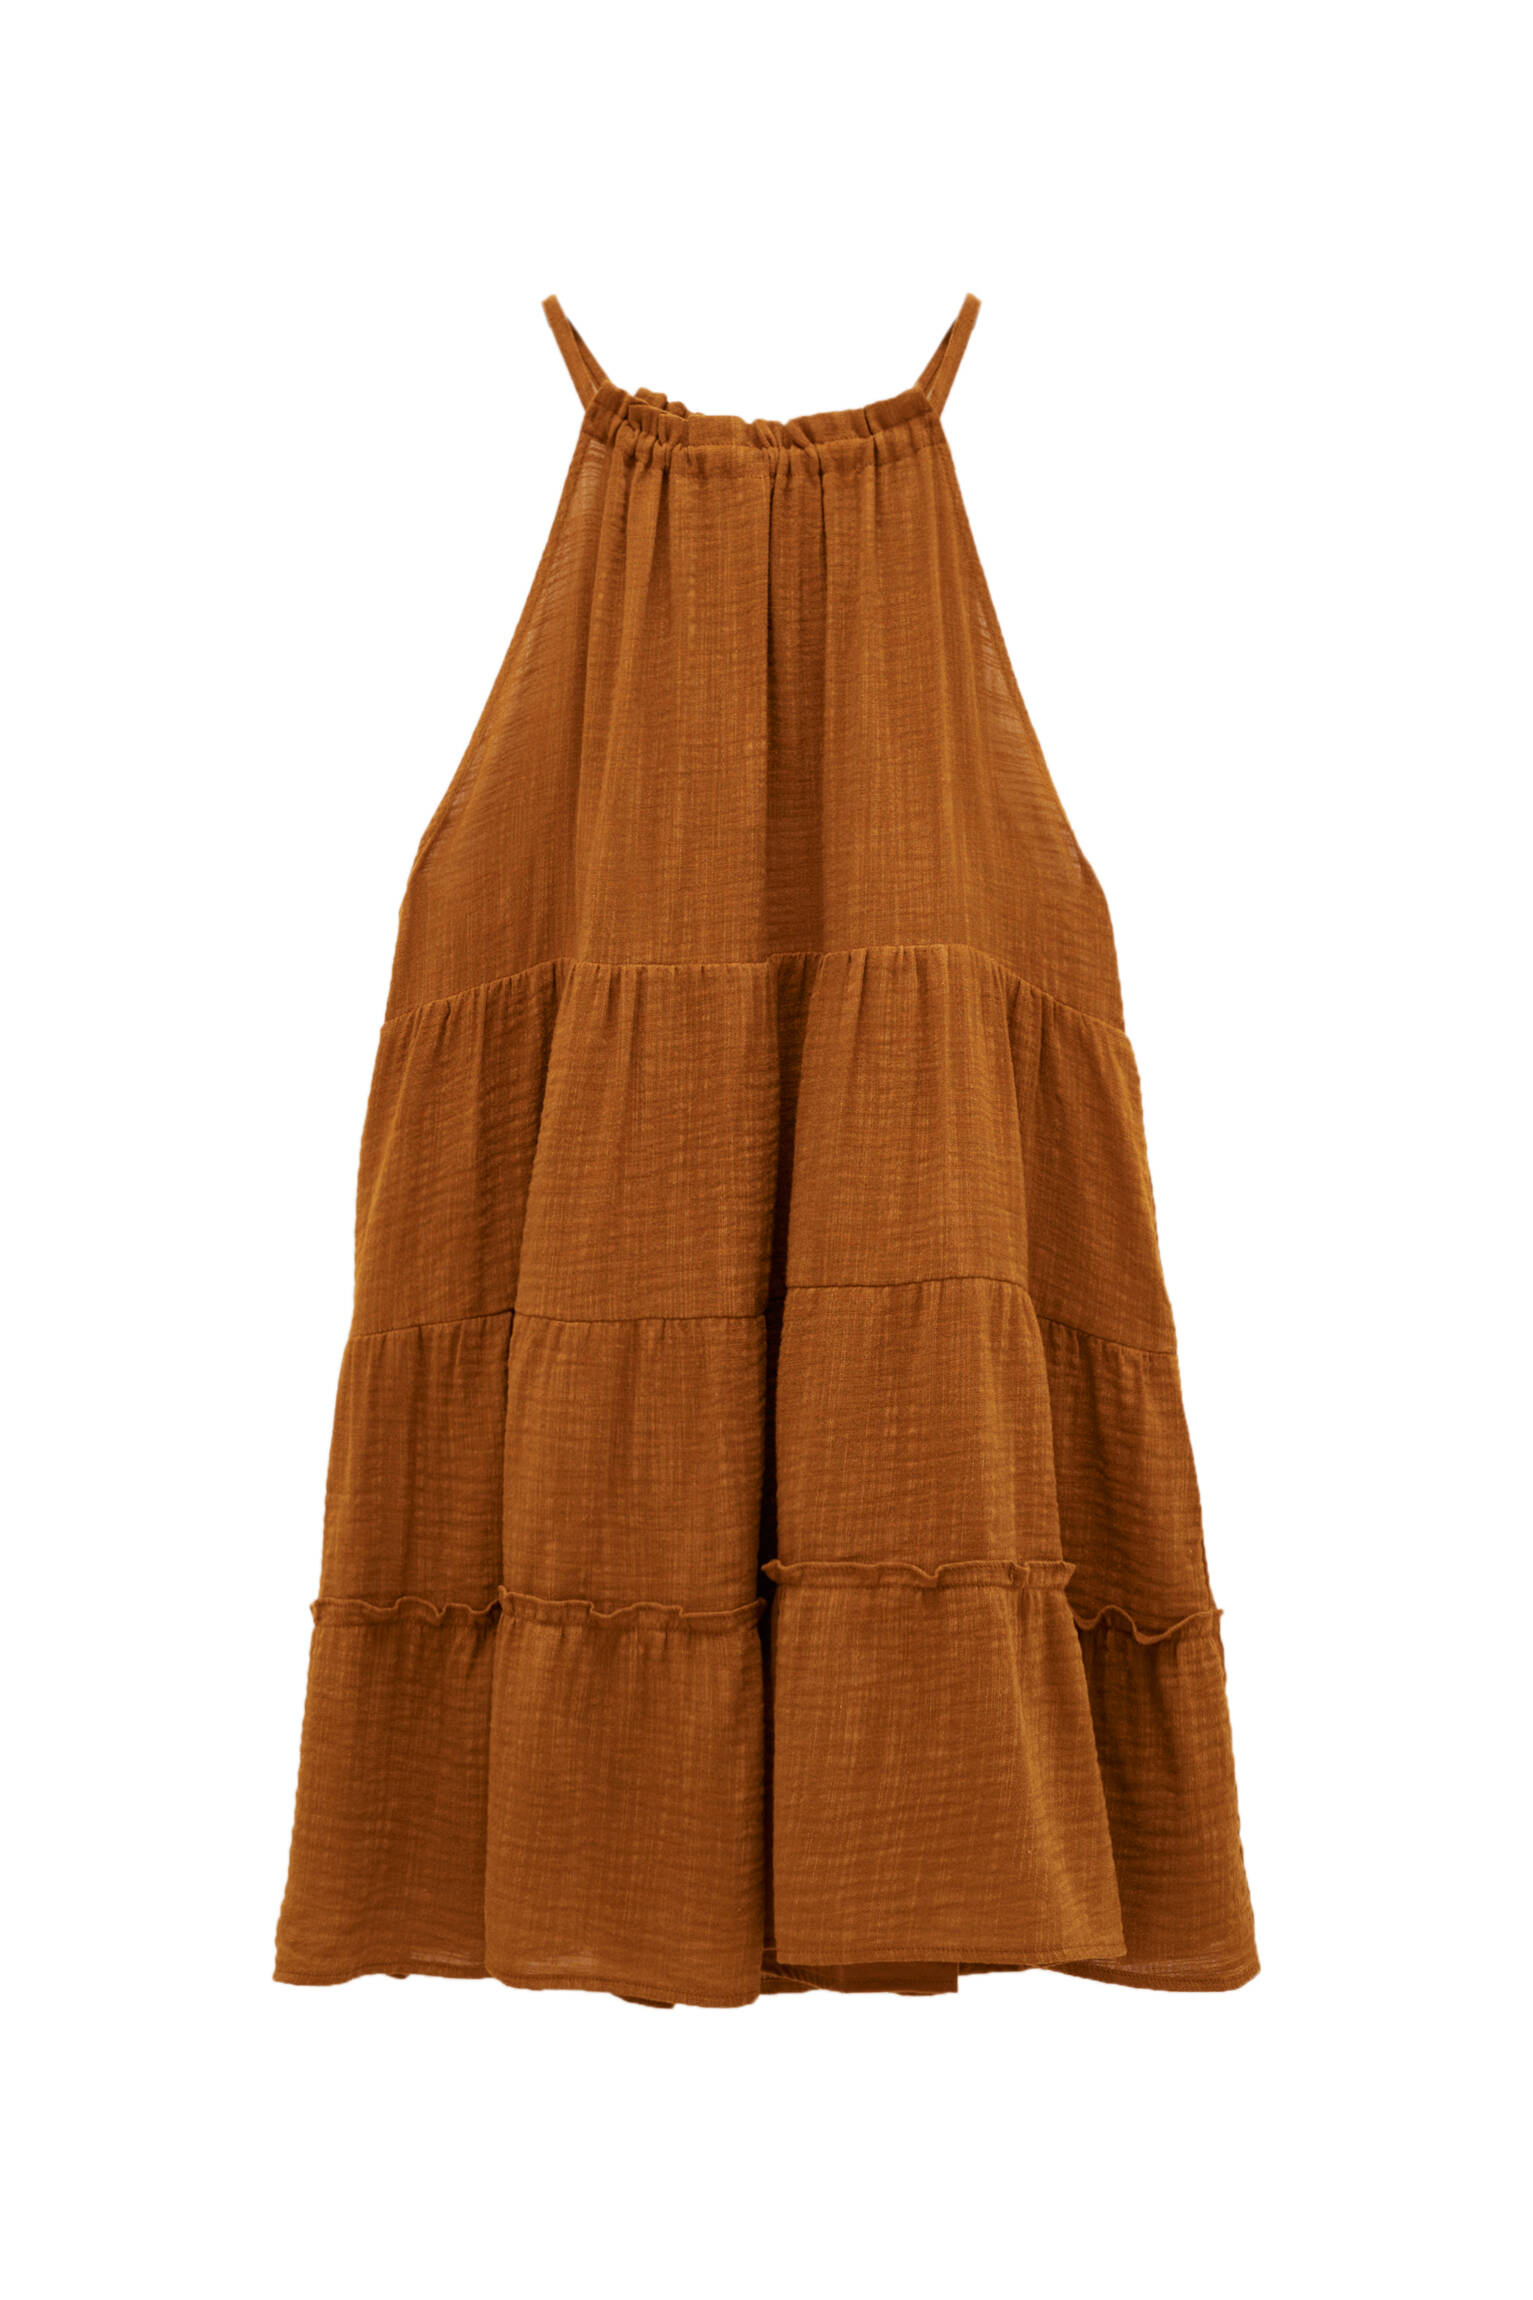 Многоярусное платье мини с горловиной халтер ОХРА Pull & Bear